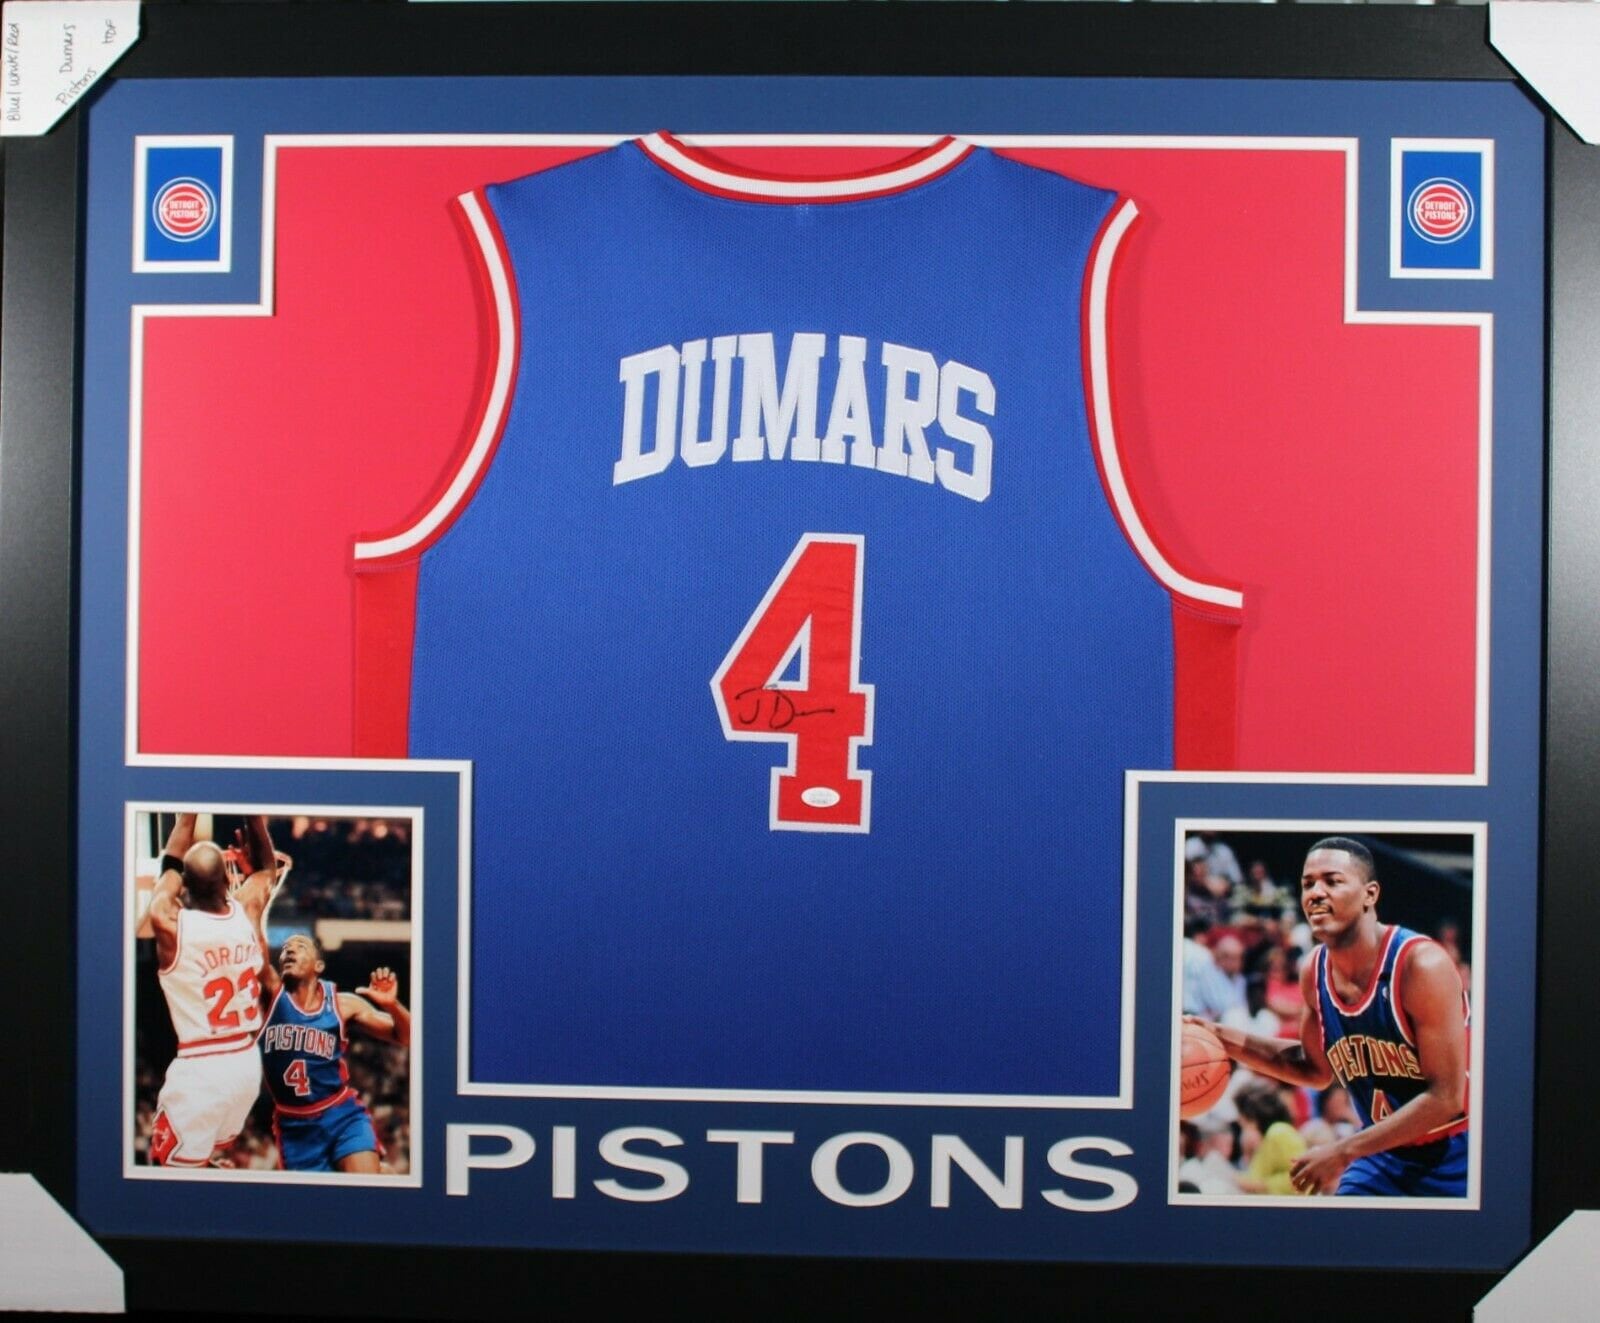 Dennis Rodman Signed Detroit Pistons Jersey (JSA COA)